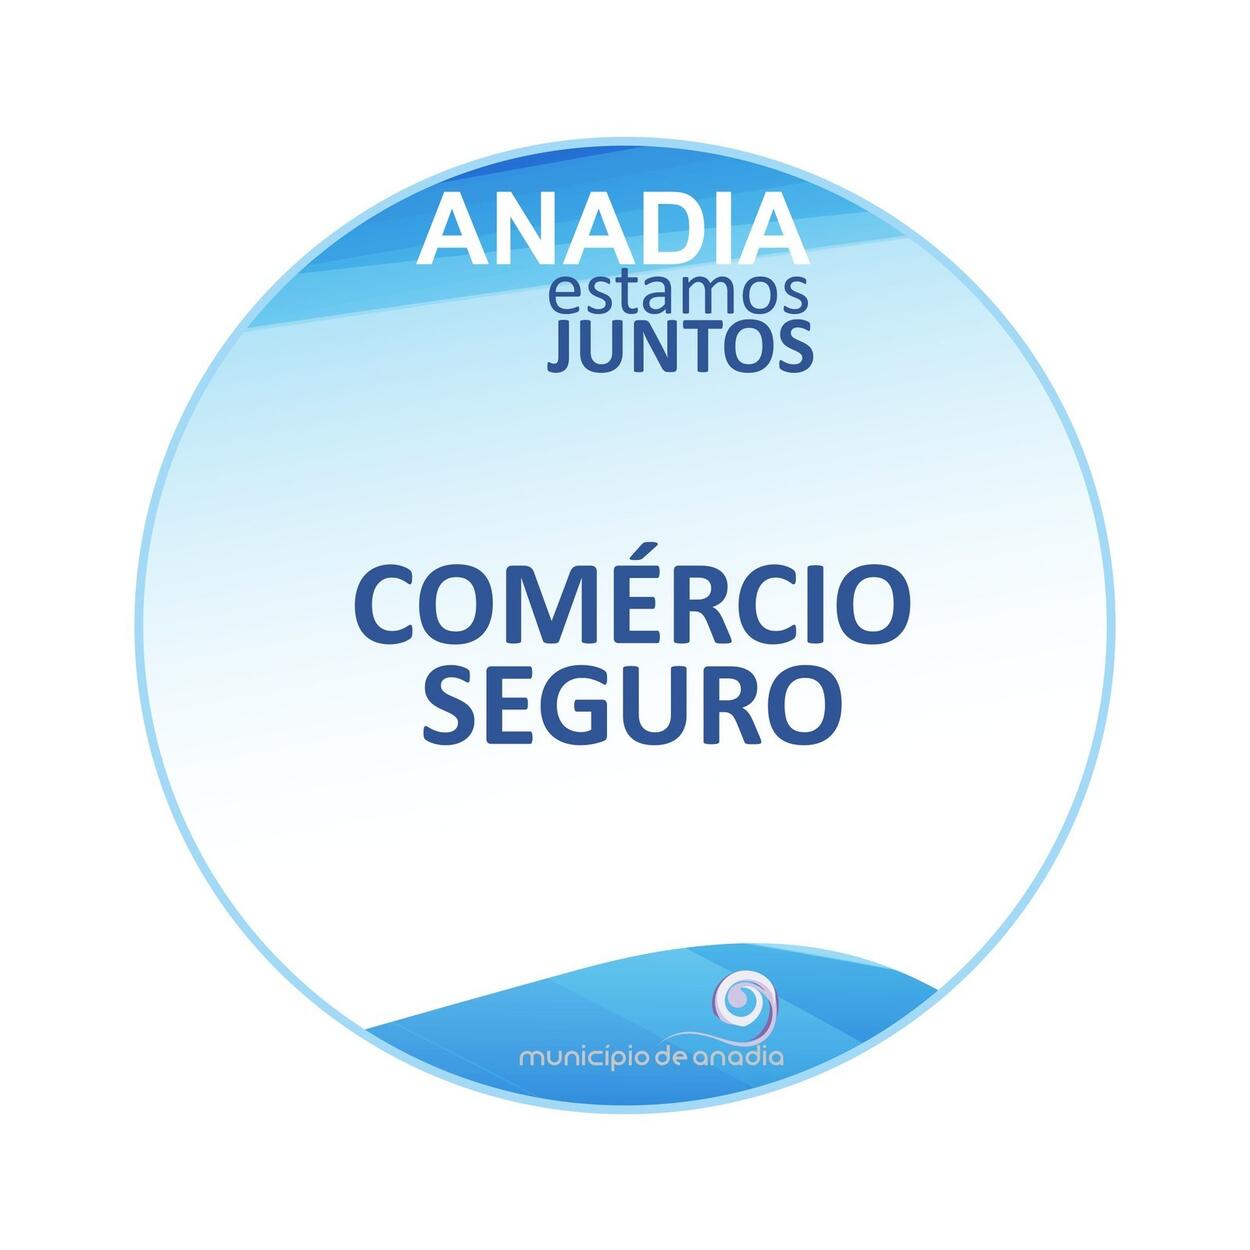 Município de Anadia promove “Comércio Seguro”